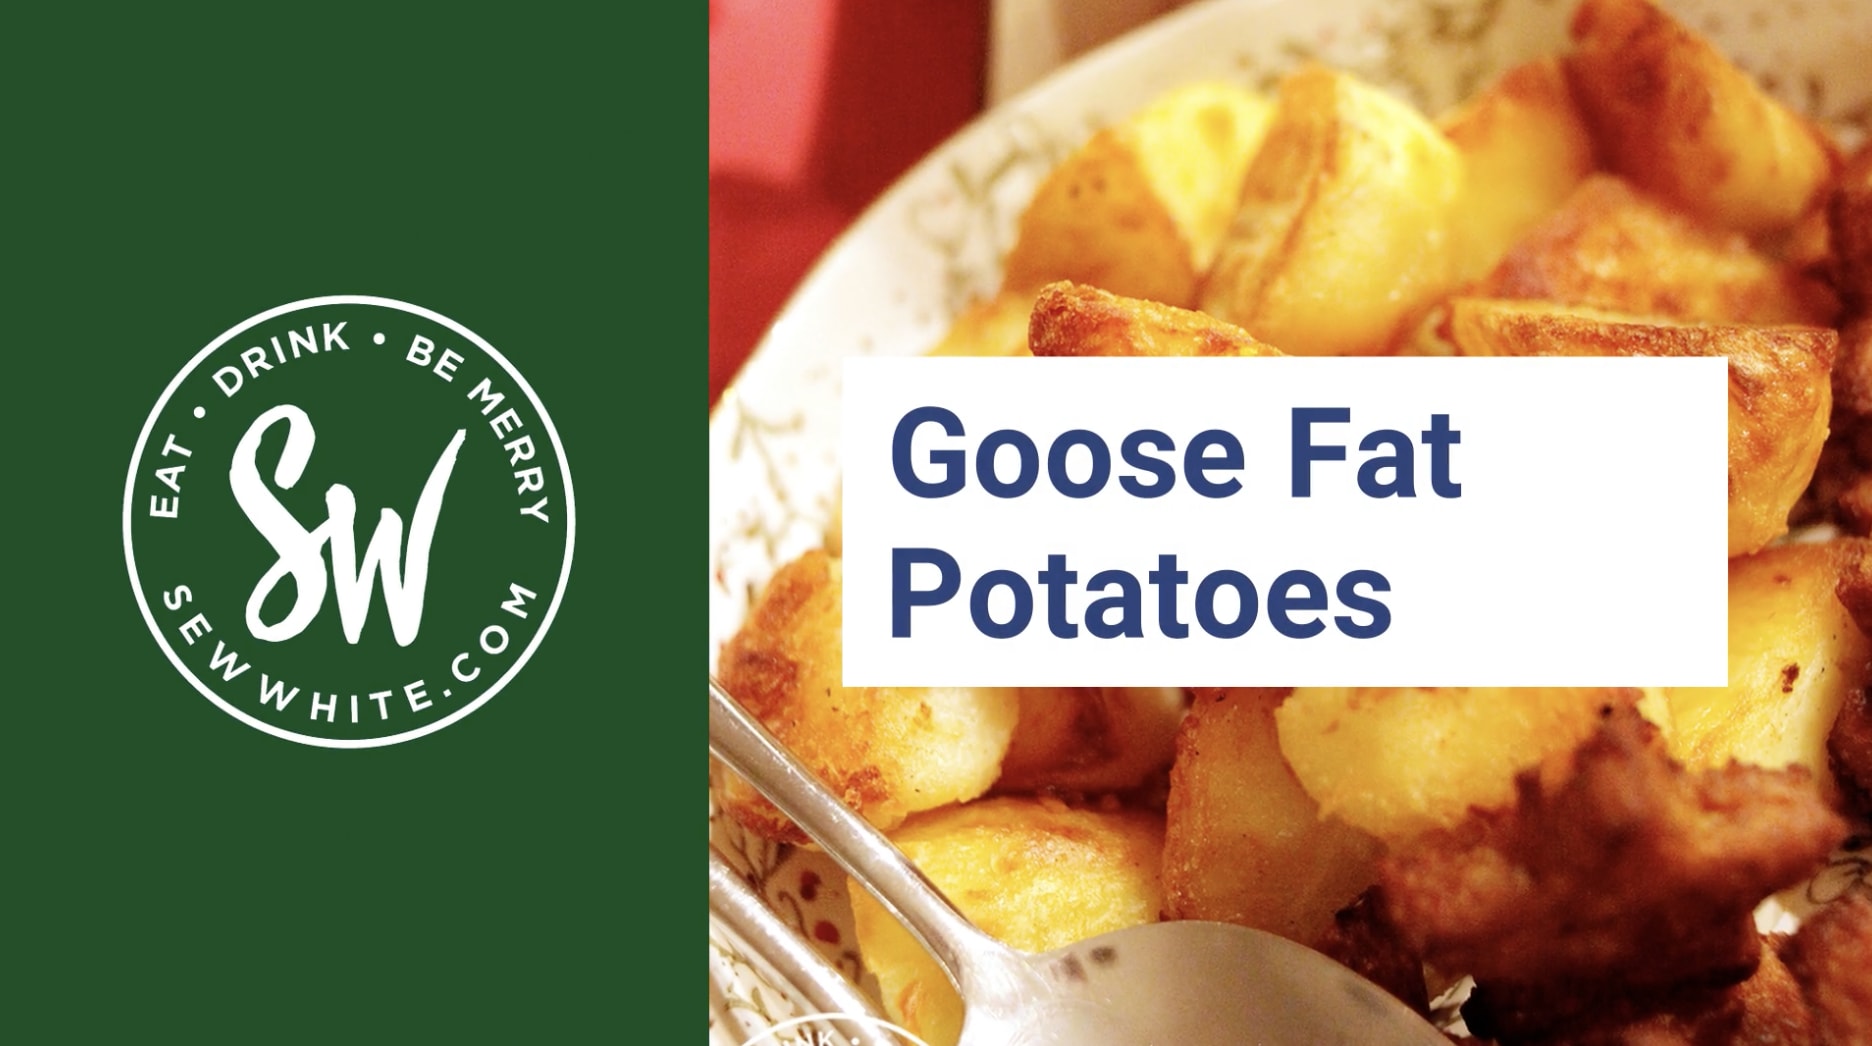 Air Fryer Goose Fat Potatoes - Sew White